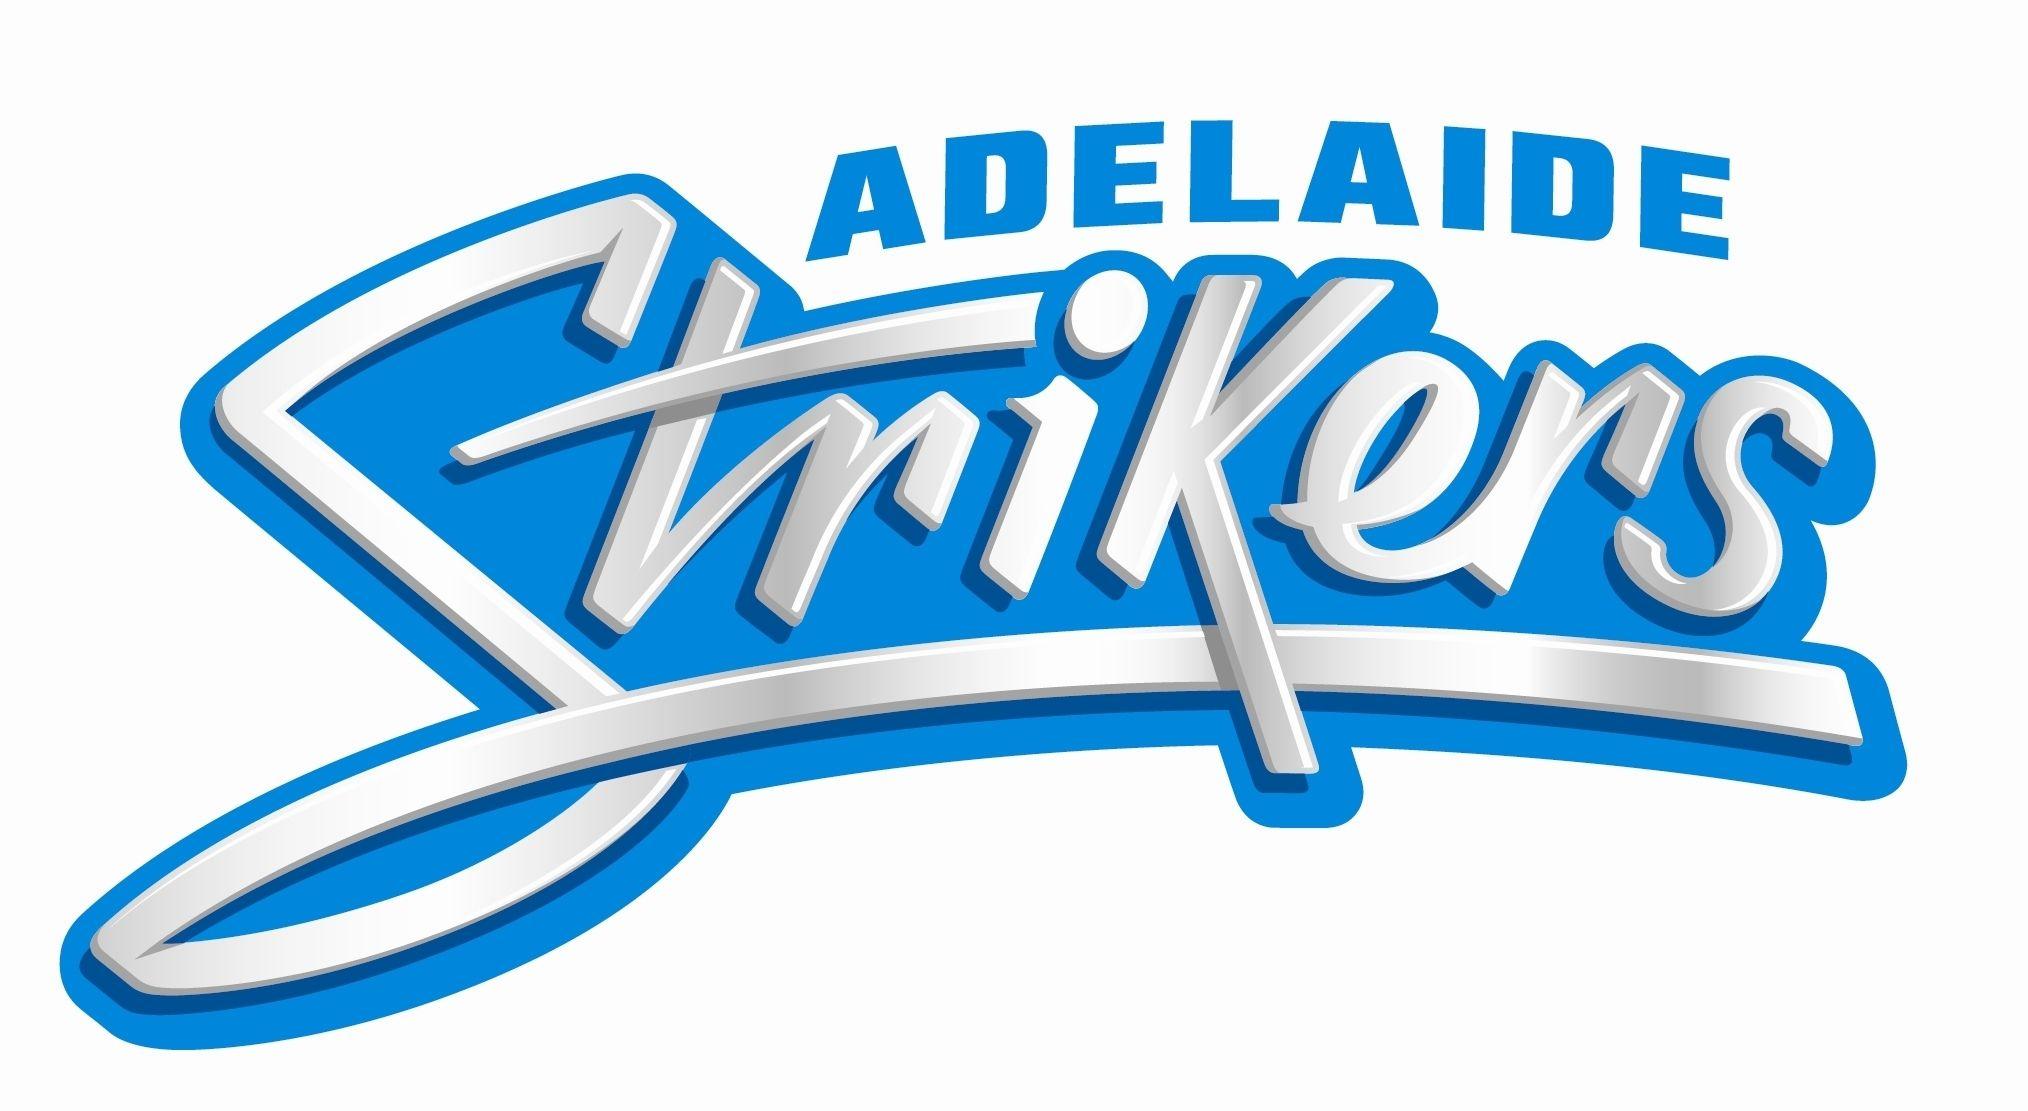 Adelaide Strikers: Meagan Dixon returns to Adelaide | cricexec